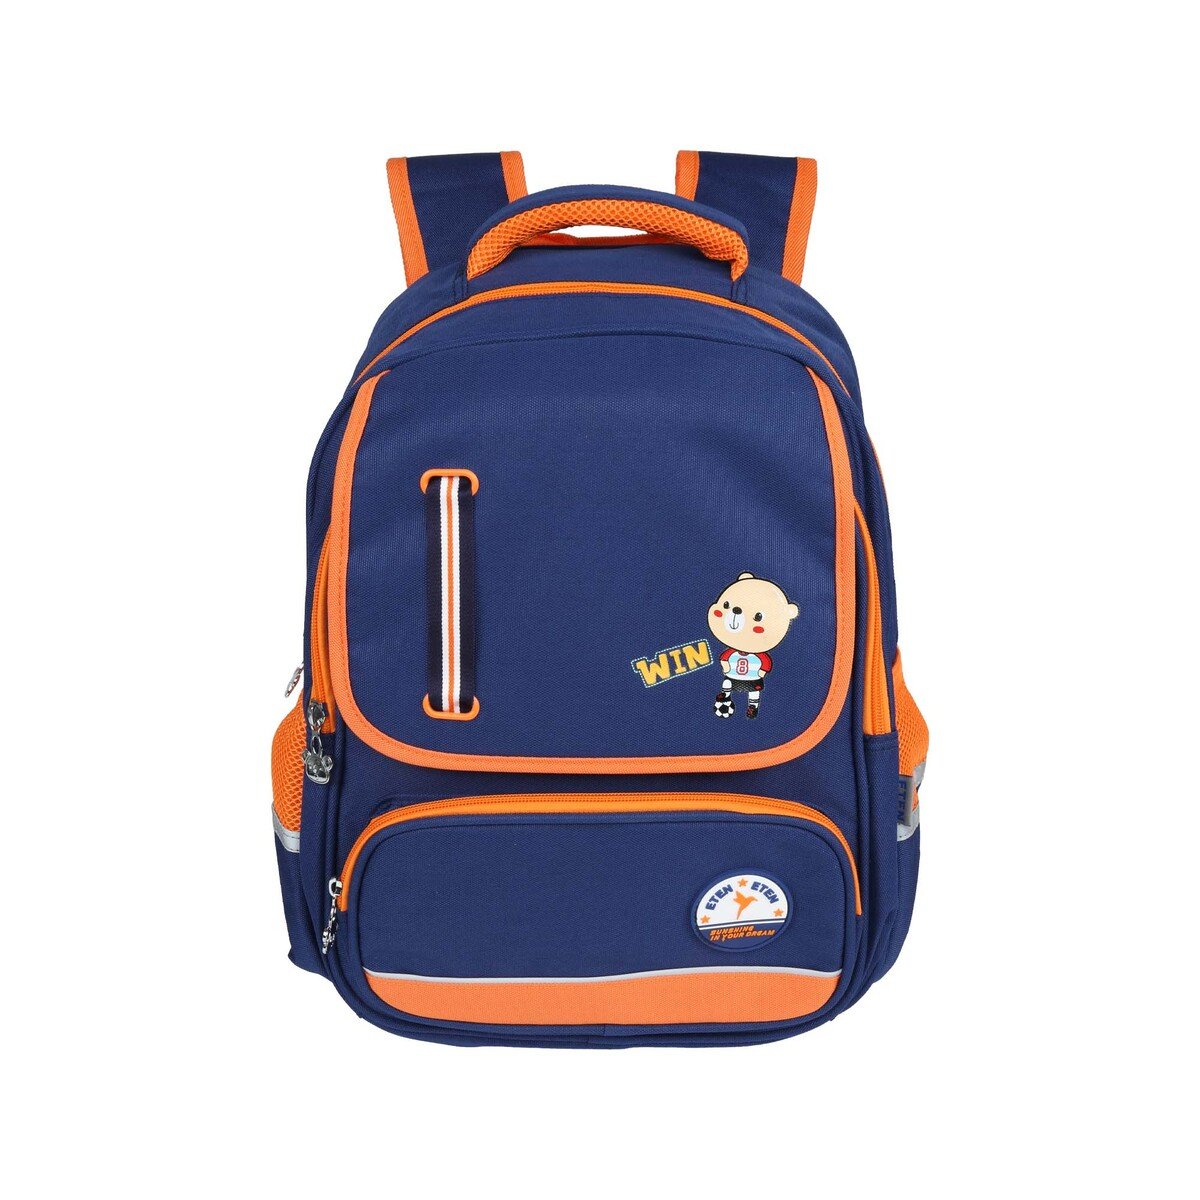 Eten Elementary Backpack 22012 15inch Assorted